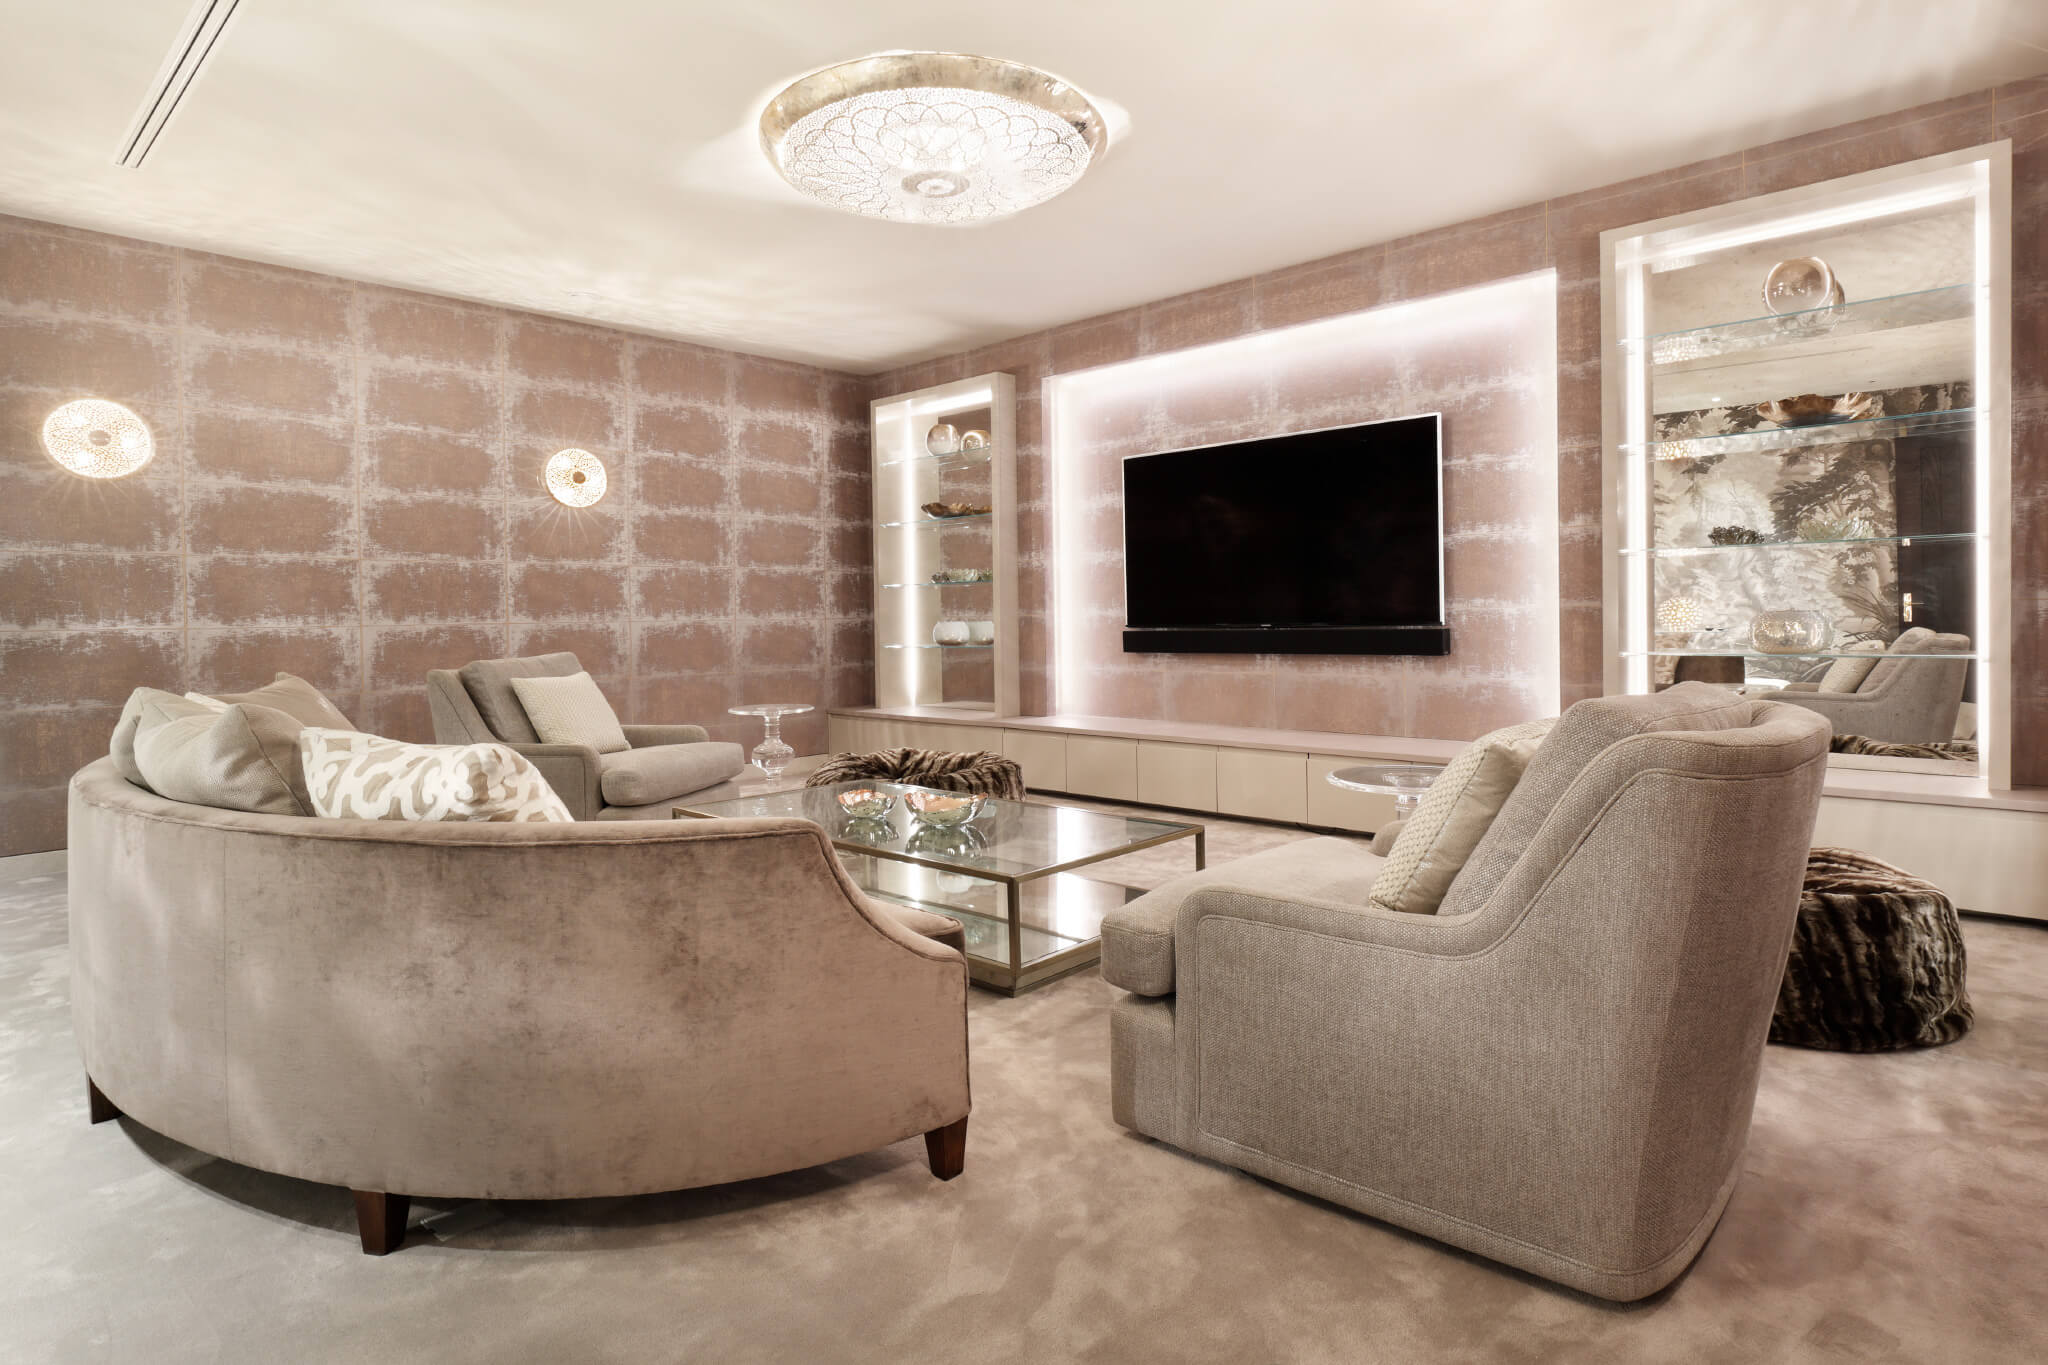 Luxury basement TV room design